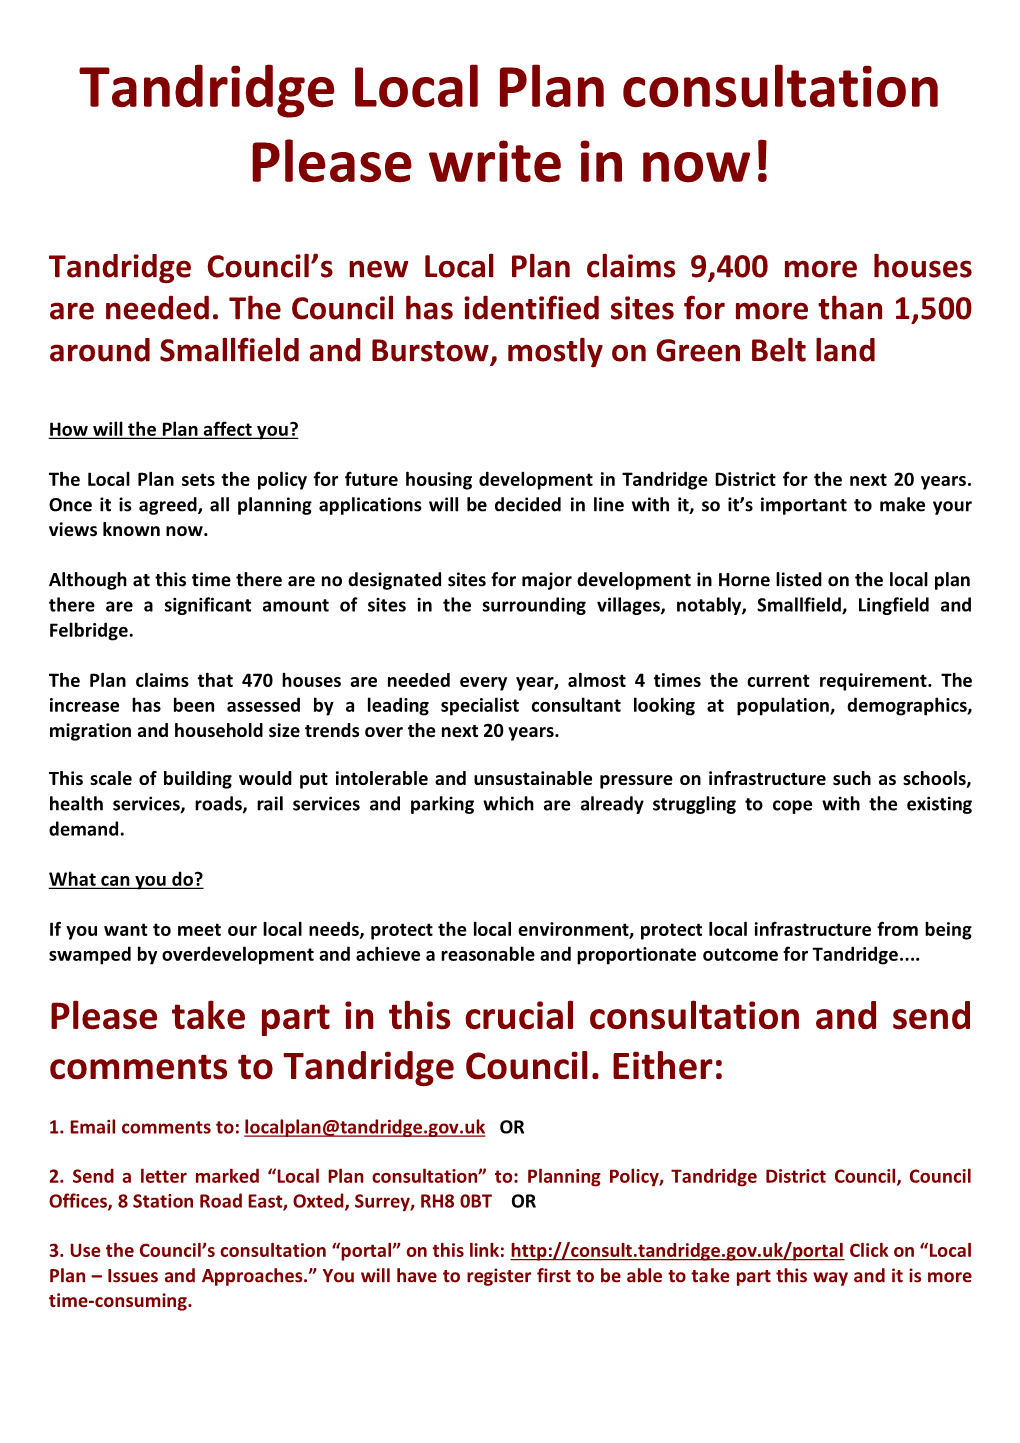 Tandridge Local Plan Consultation Please Write in Now!